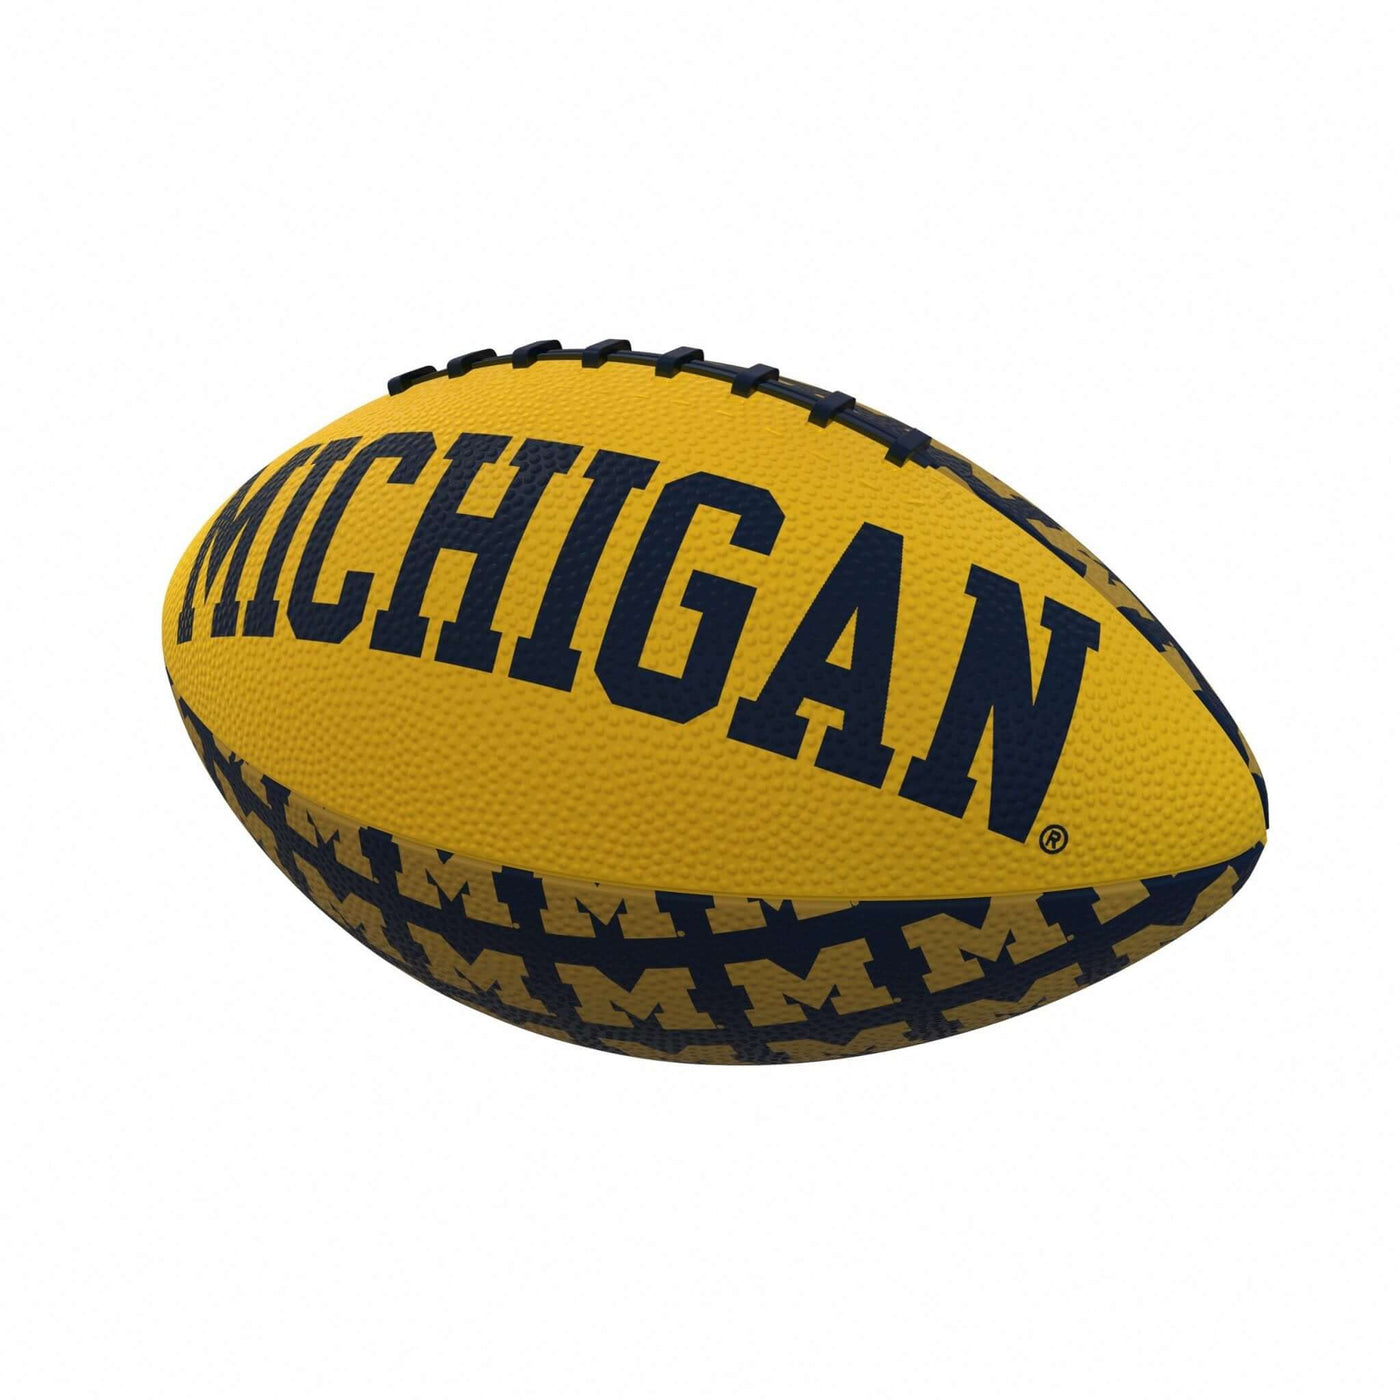 Michigan Repeating Mini-Size Rubber Football - Logo Brands